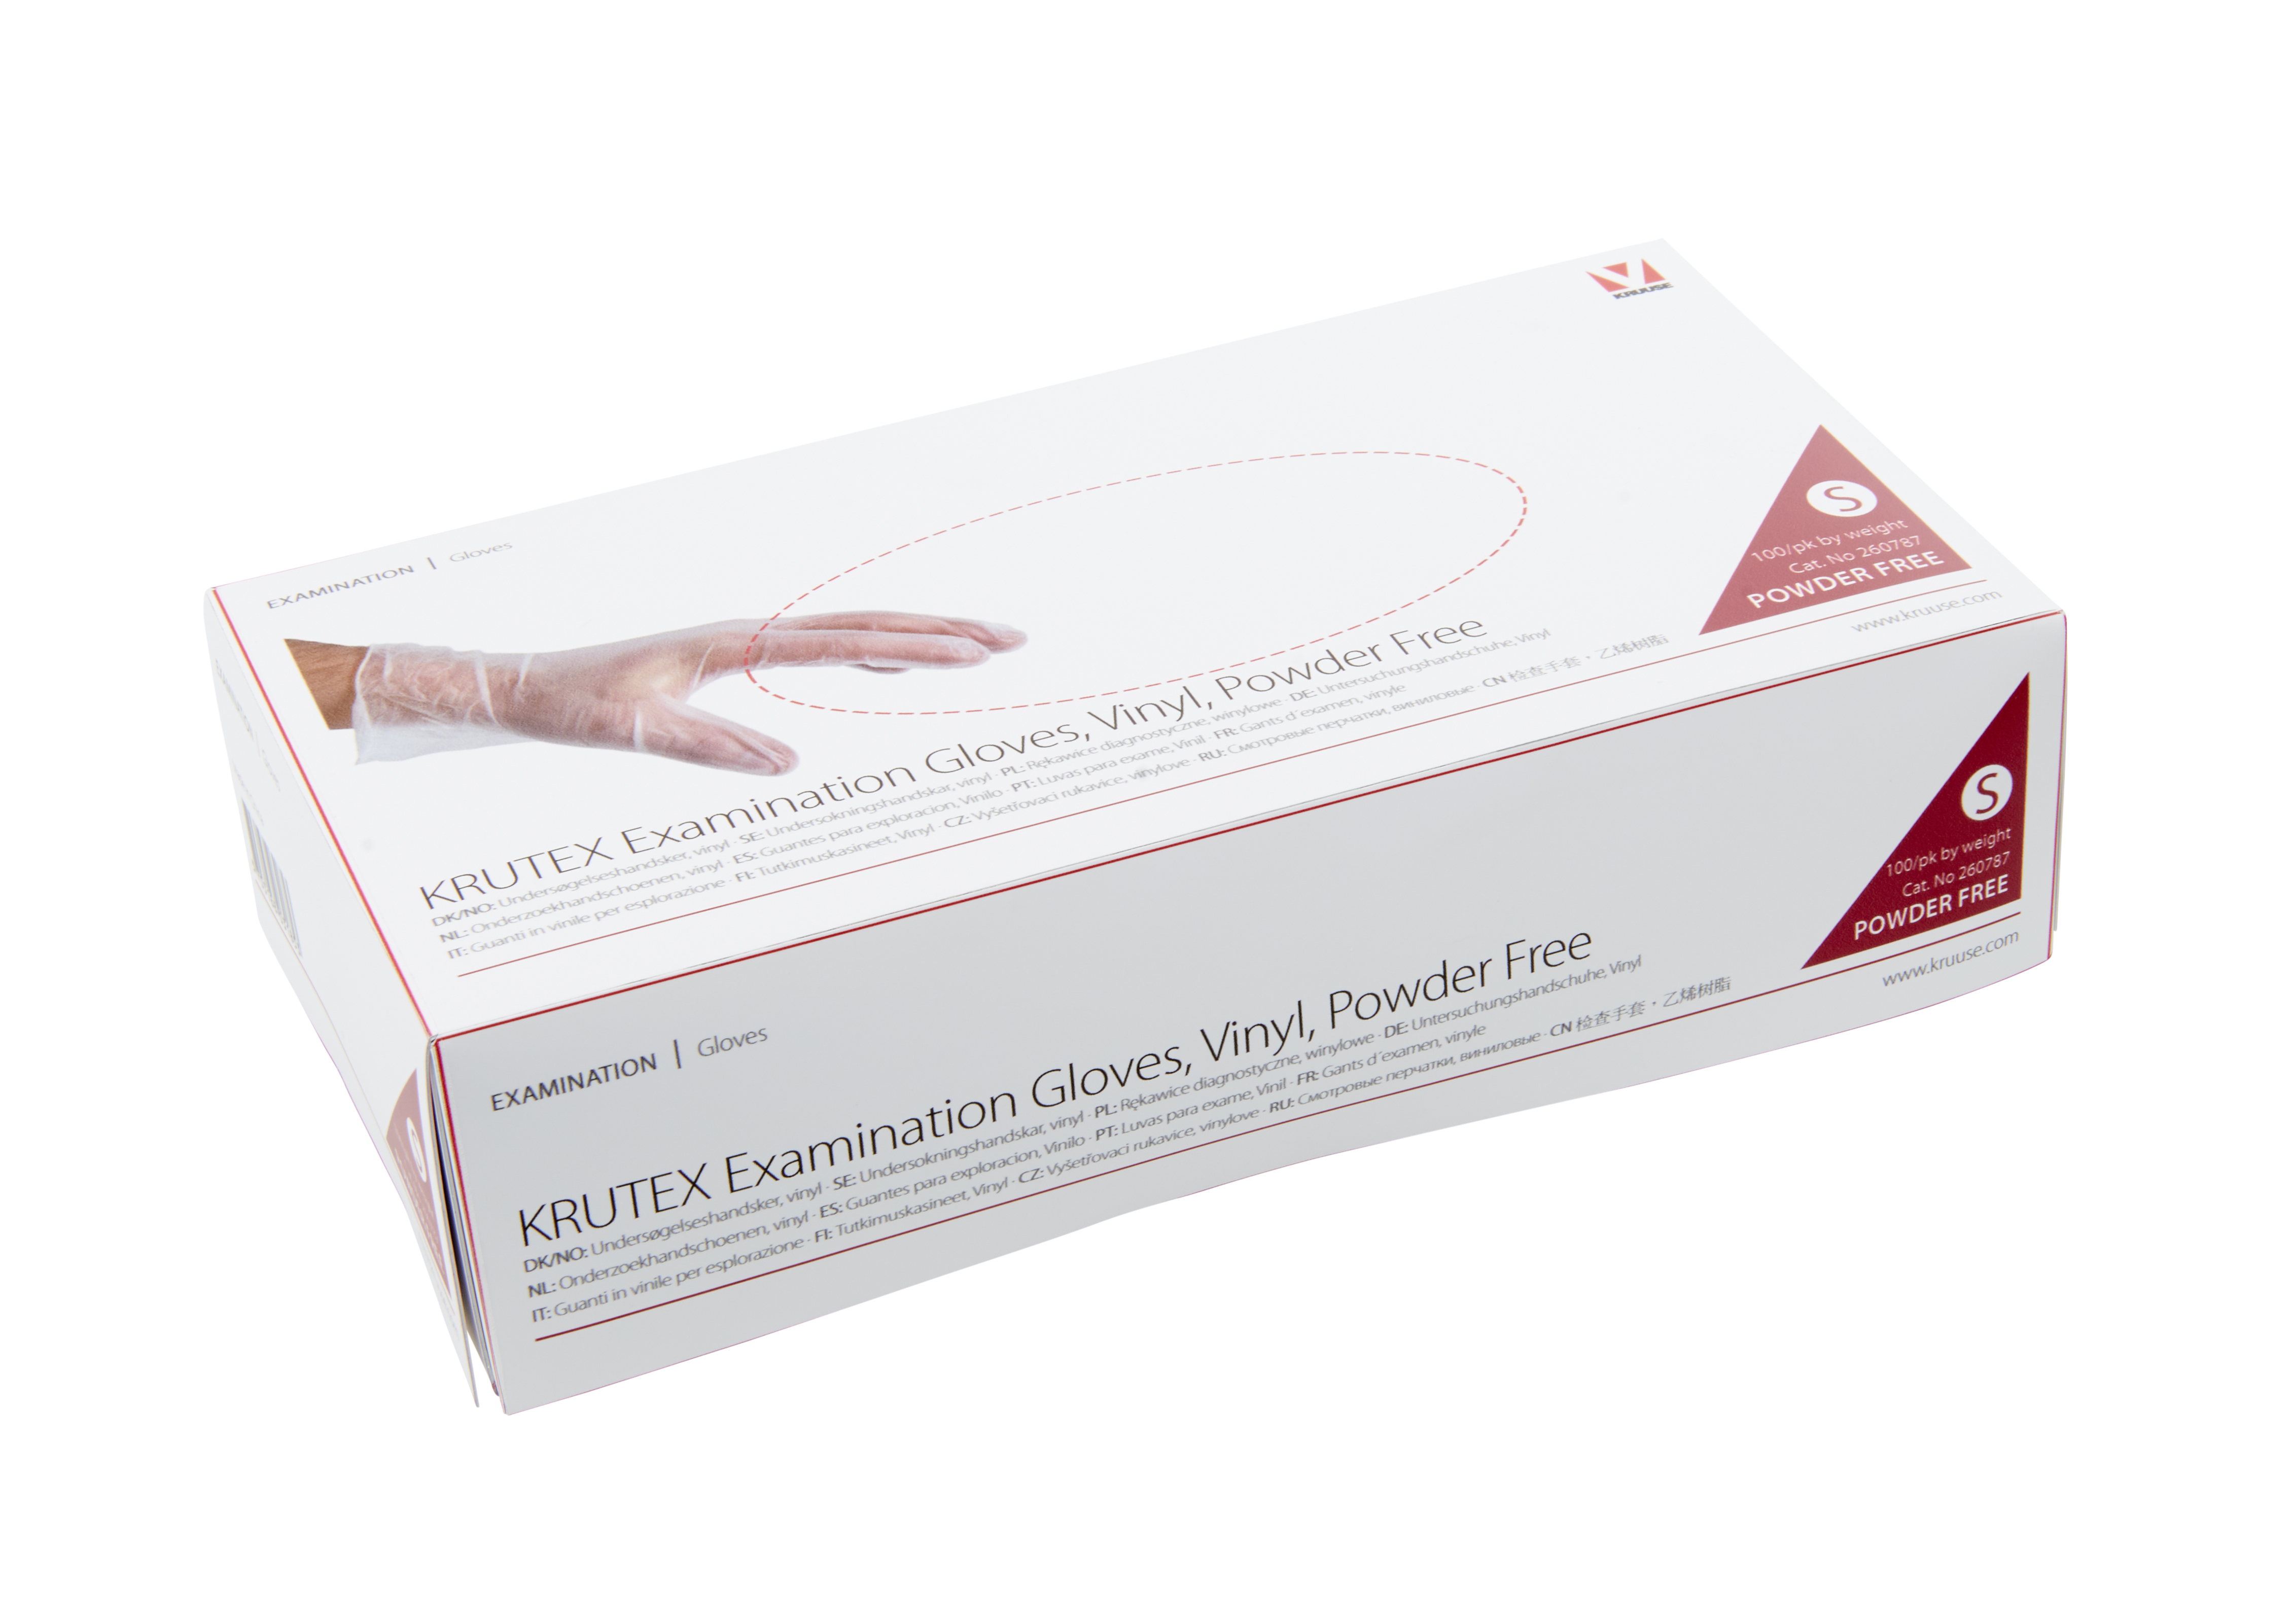 KRUTEX Examination Gloves, vinyl, powder-free, S, 100/pk